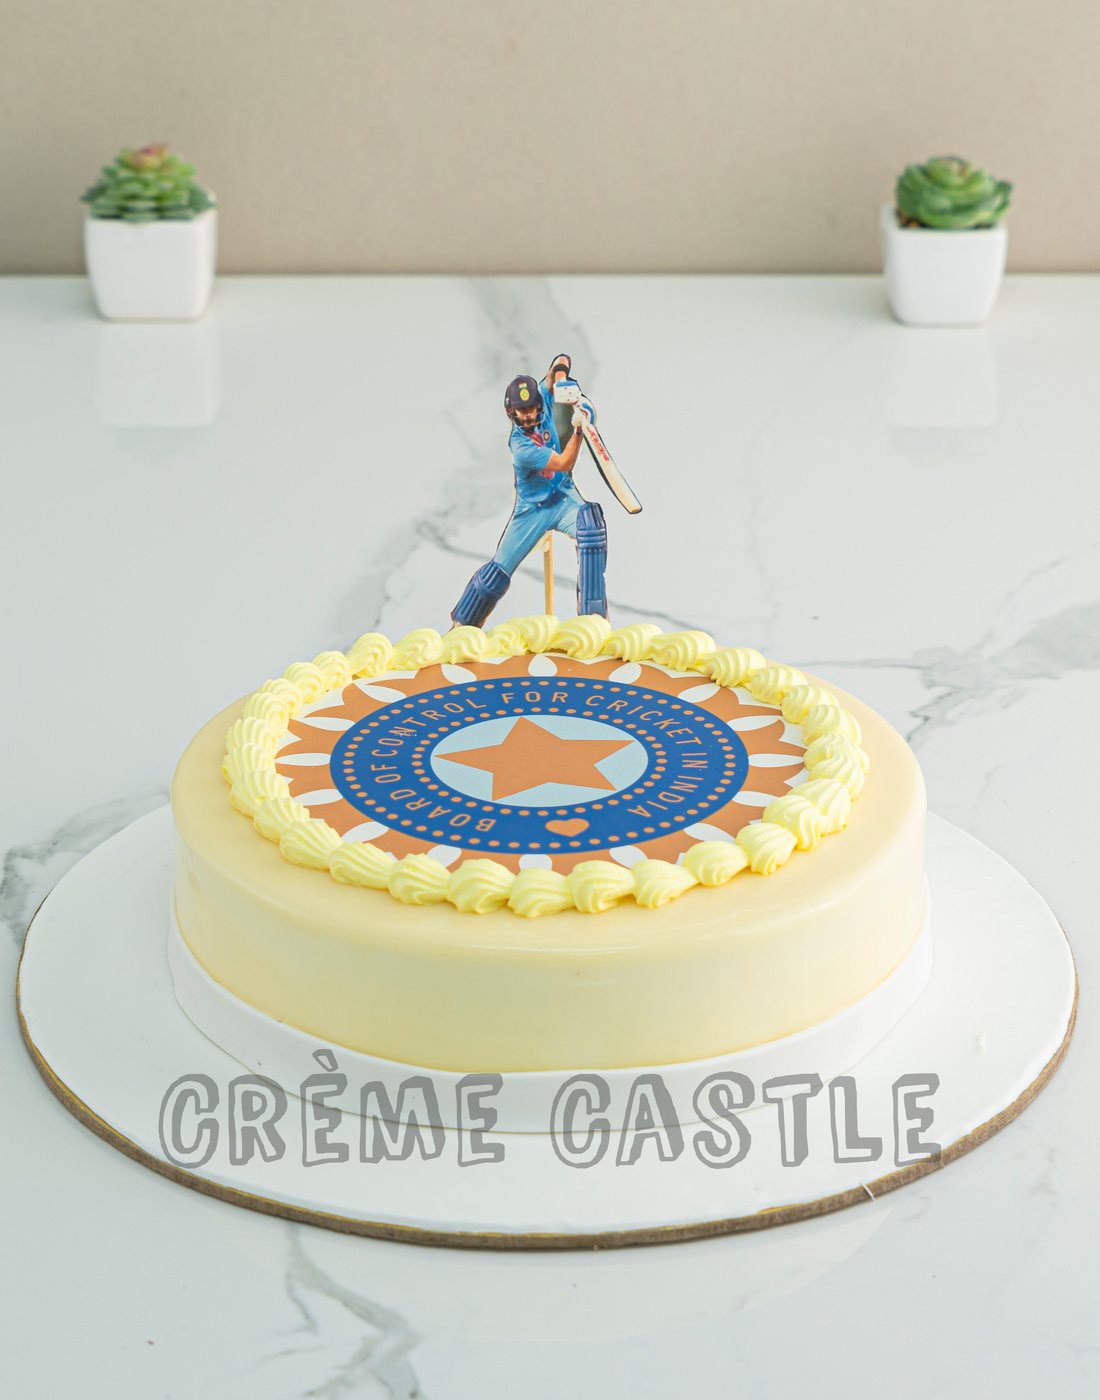 BCCI Cricketer Cake